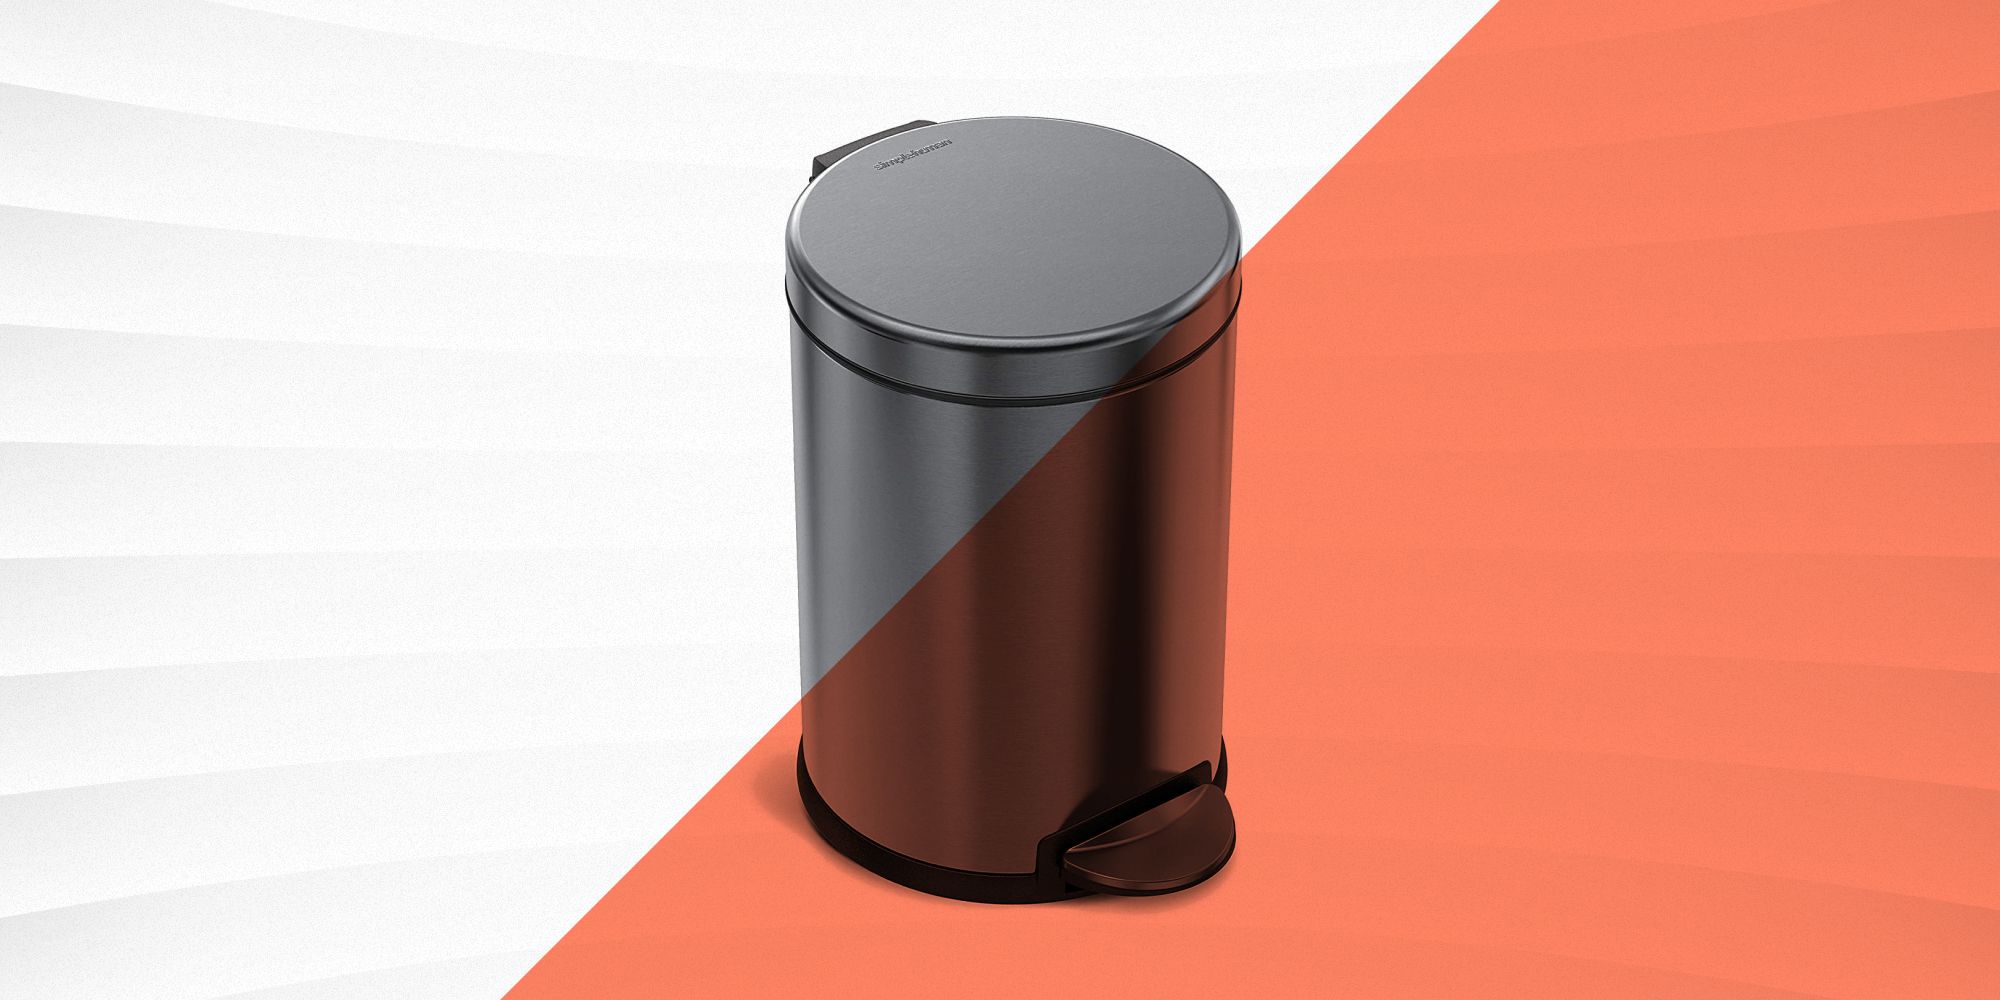 3 in 1 bathroom trash can with waste bin - Top Kitchen Gadget